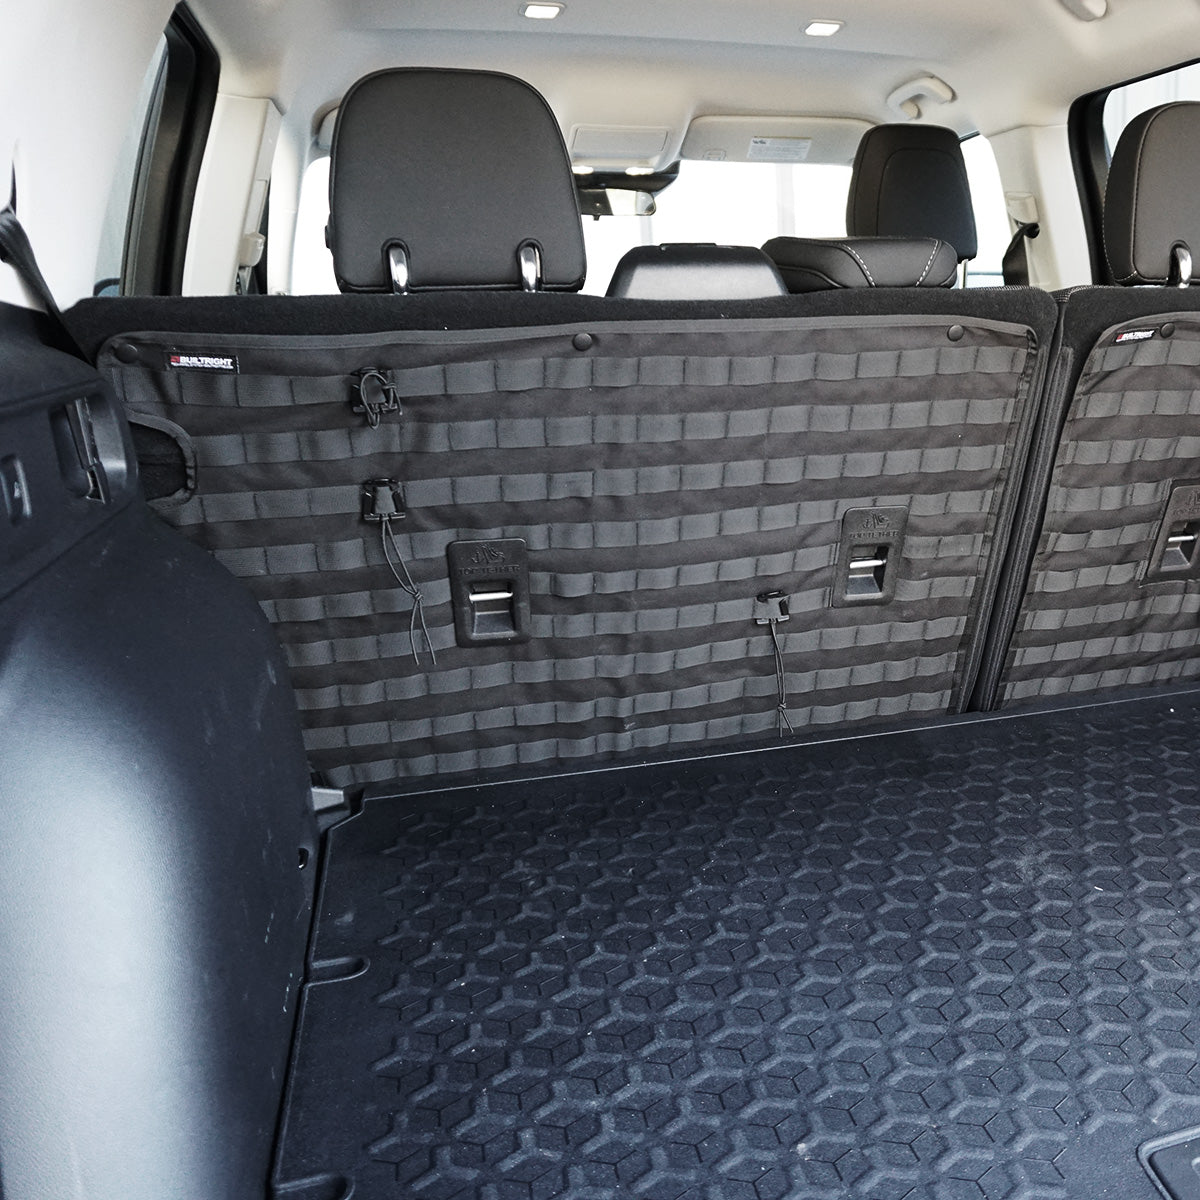 Velcro Tech Panel - Rear Seat Back Kit | Ford Bronco Sport (2021+)